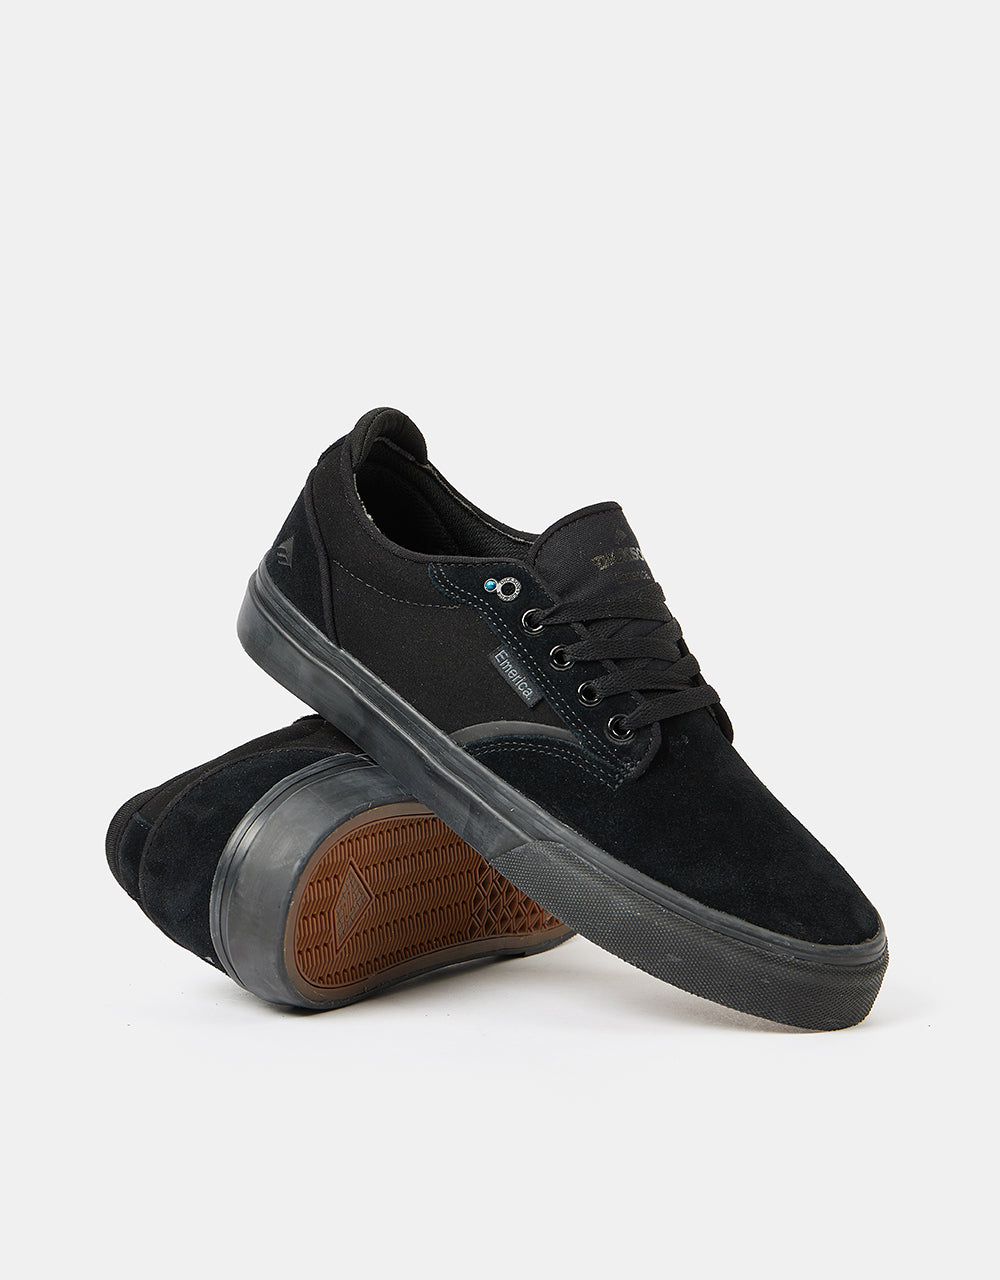 Emerica Dickson Skate Shoes - Black/Black